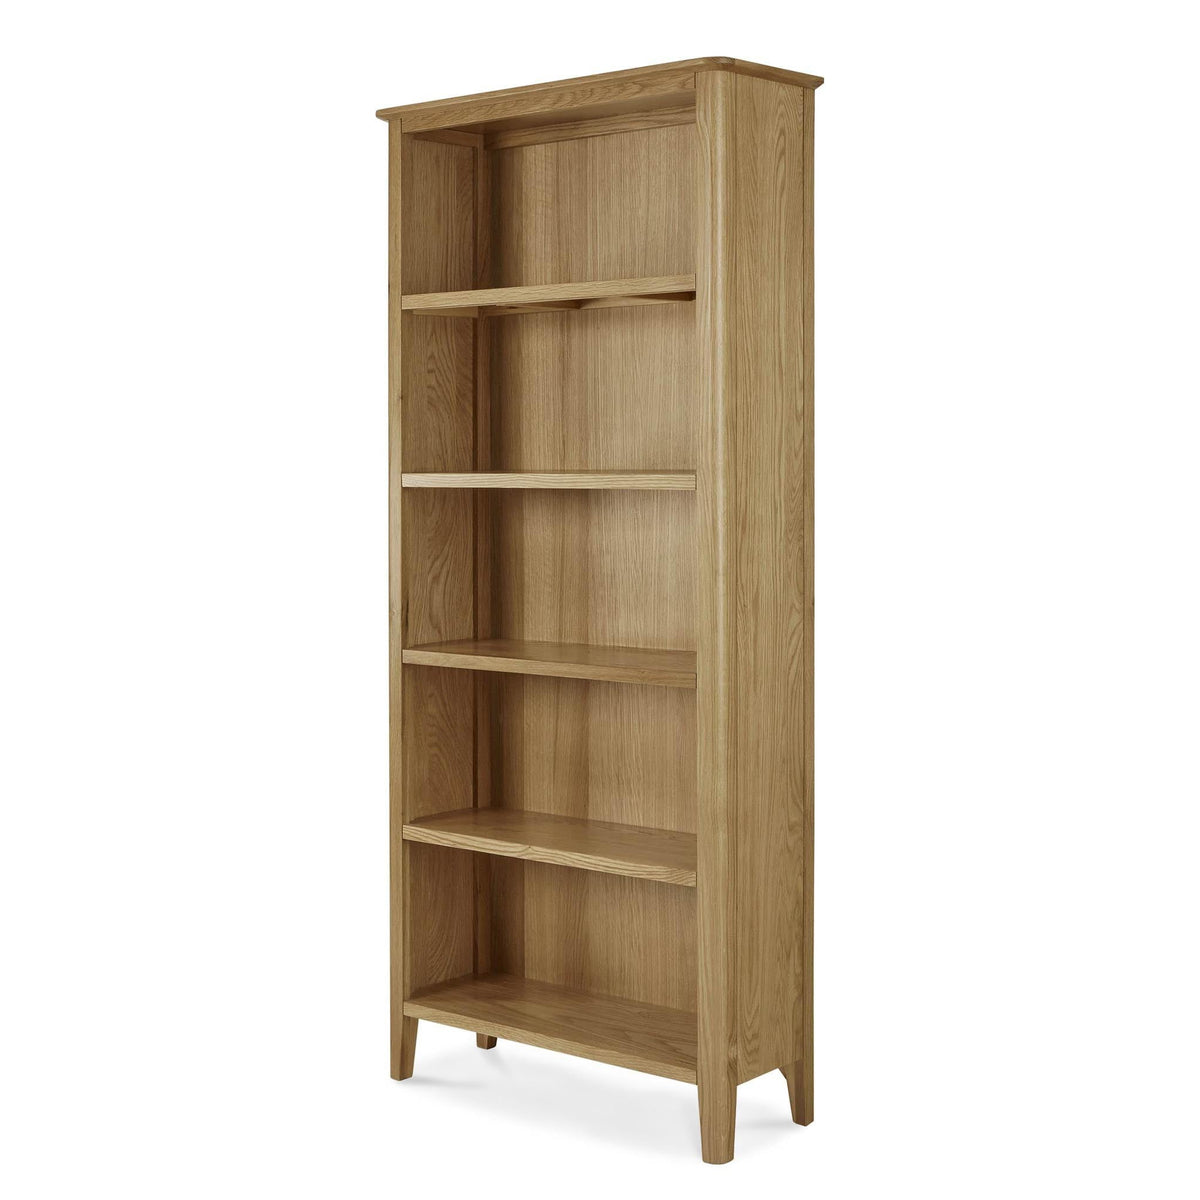 Alba Oak Large Bookcase - Side view